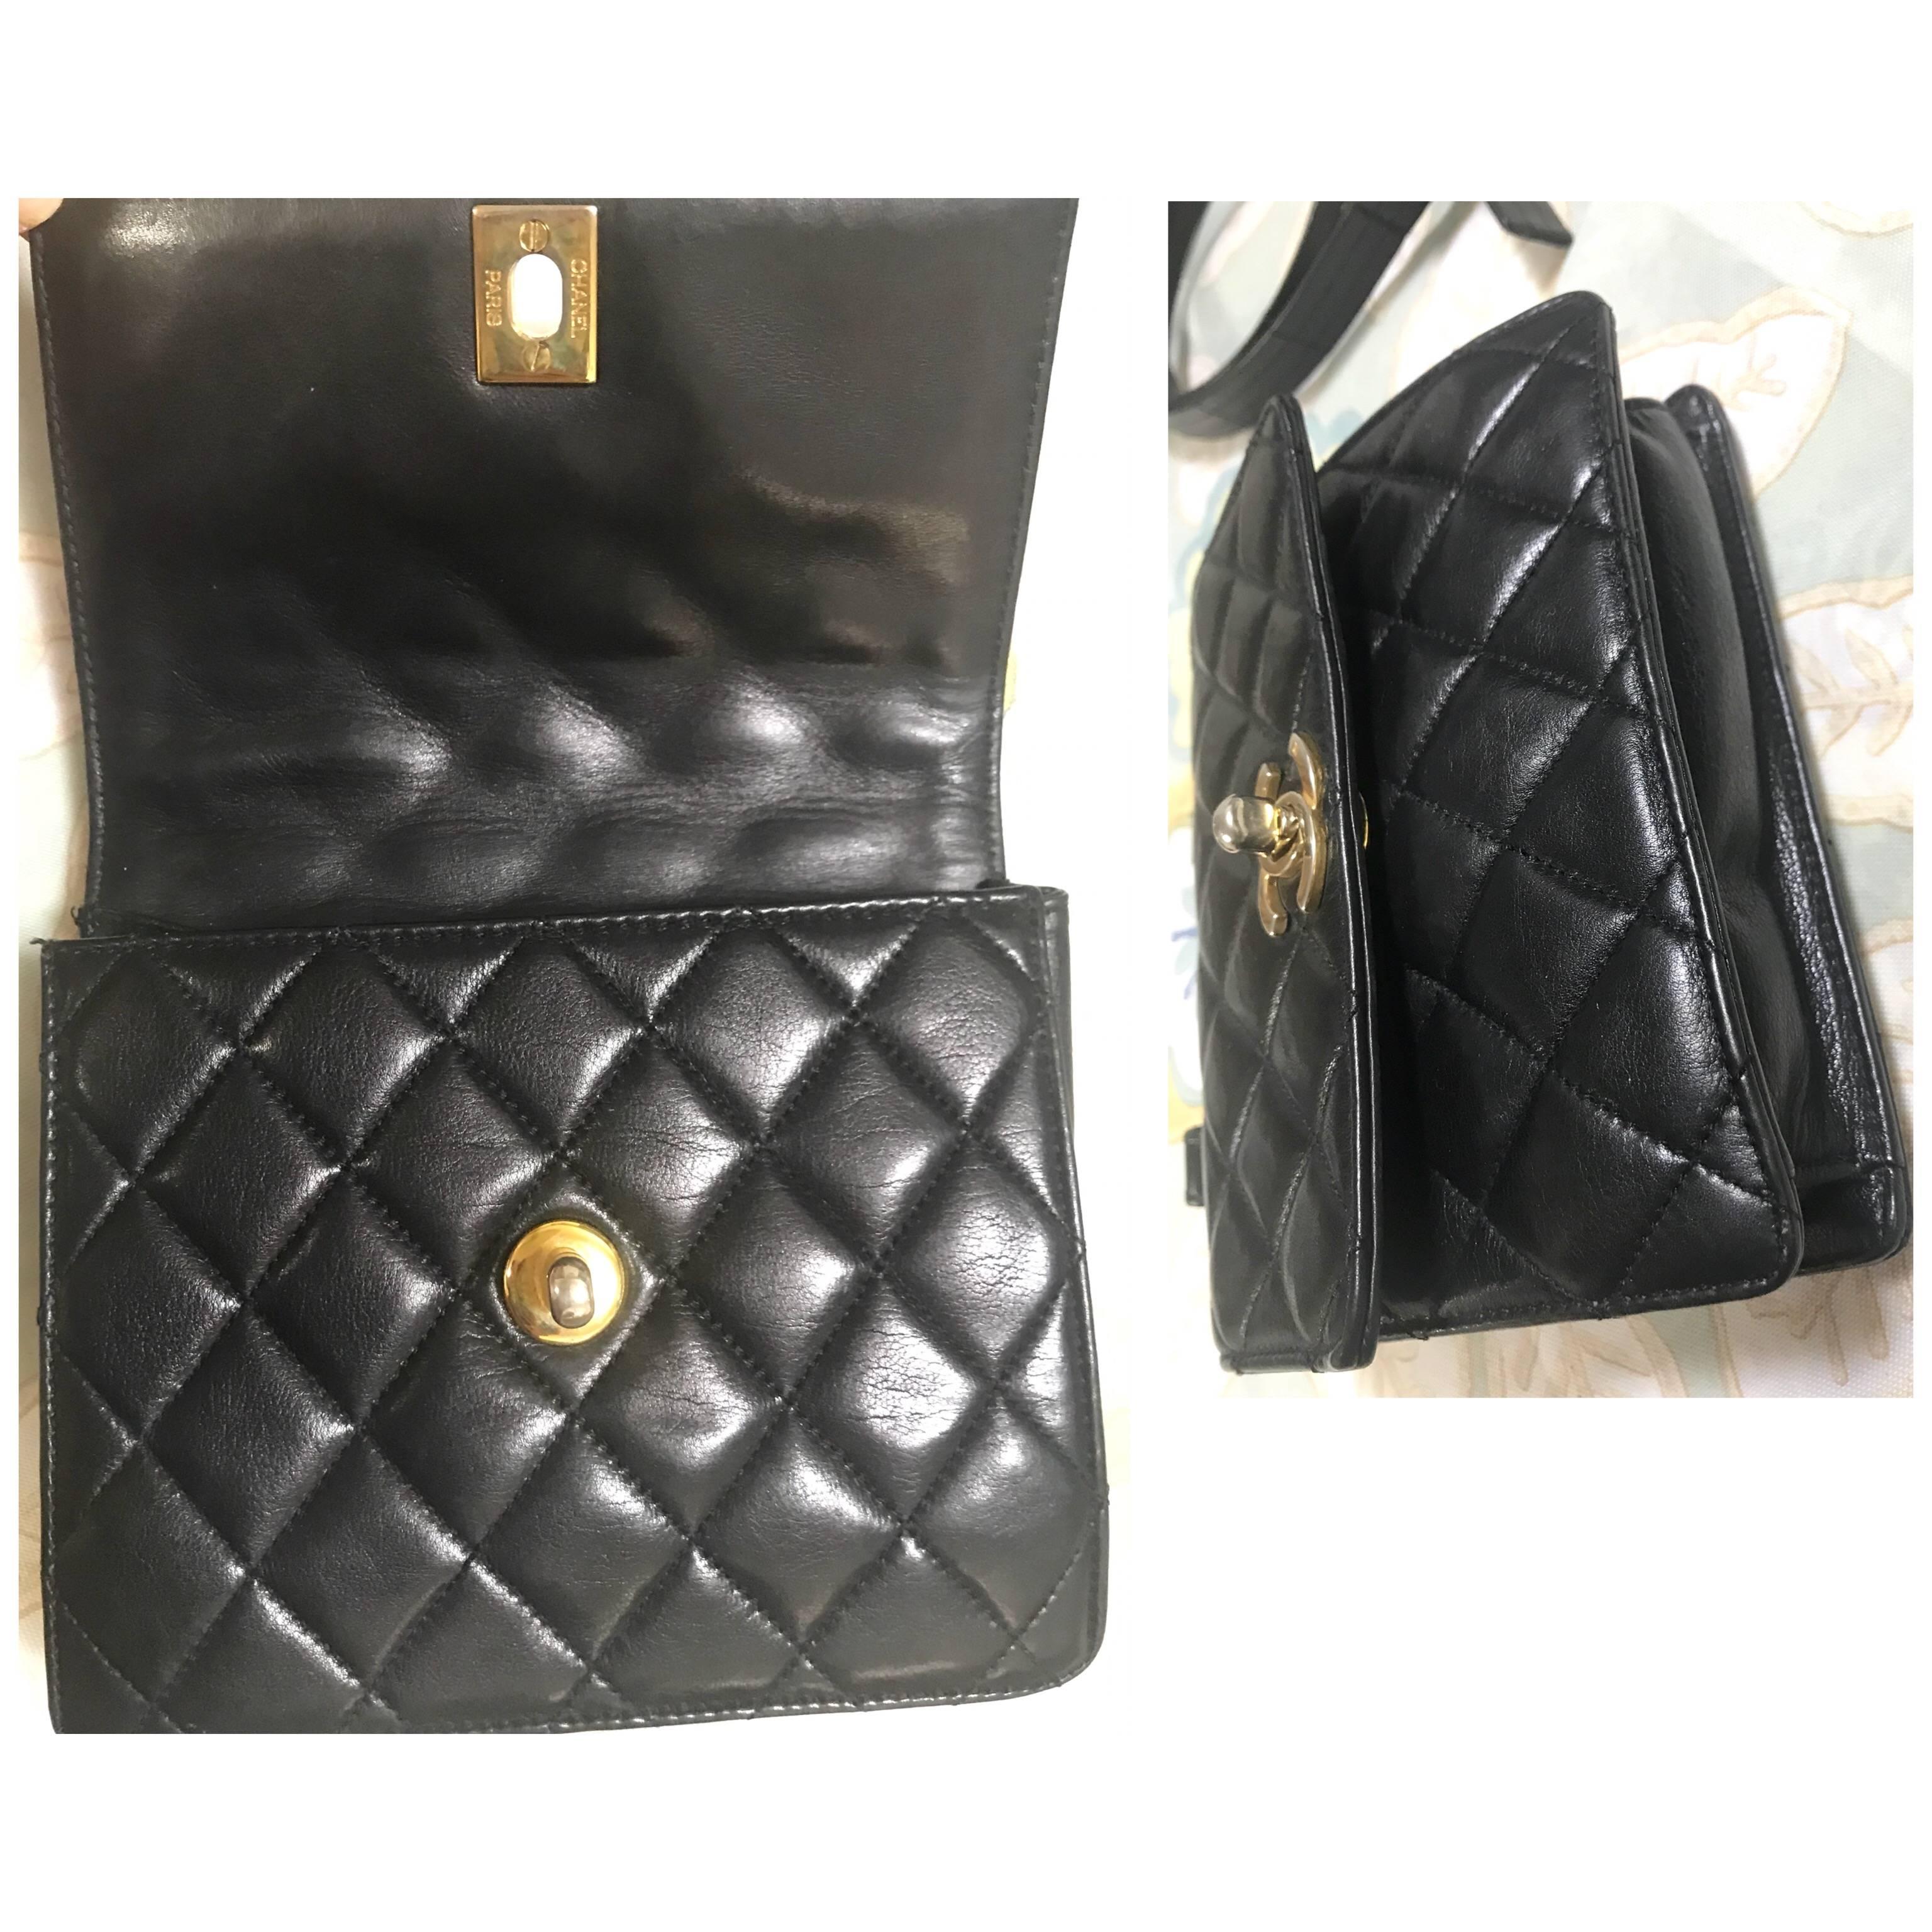 Vintage CHANEL square black lambskin waist purse, fanny pack pouch and belt set. 2